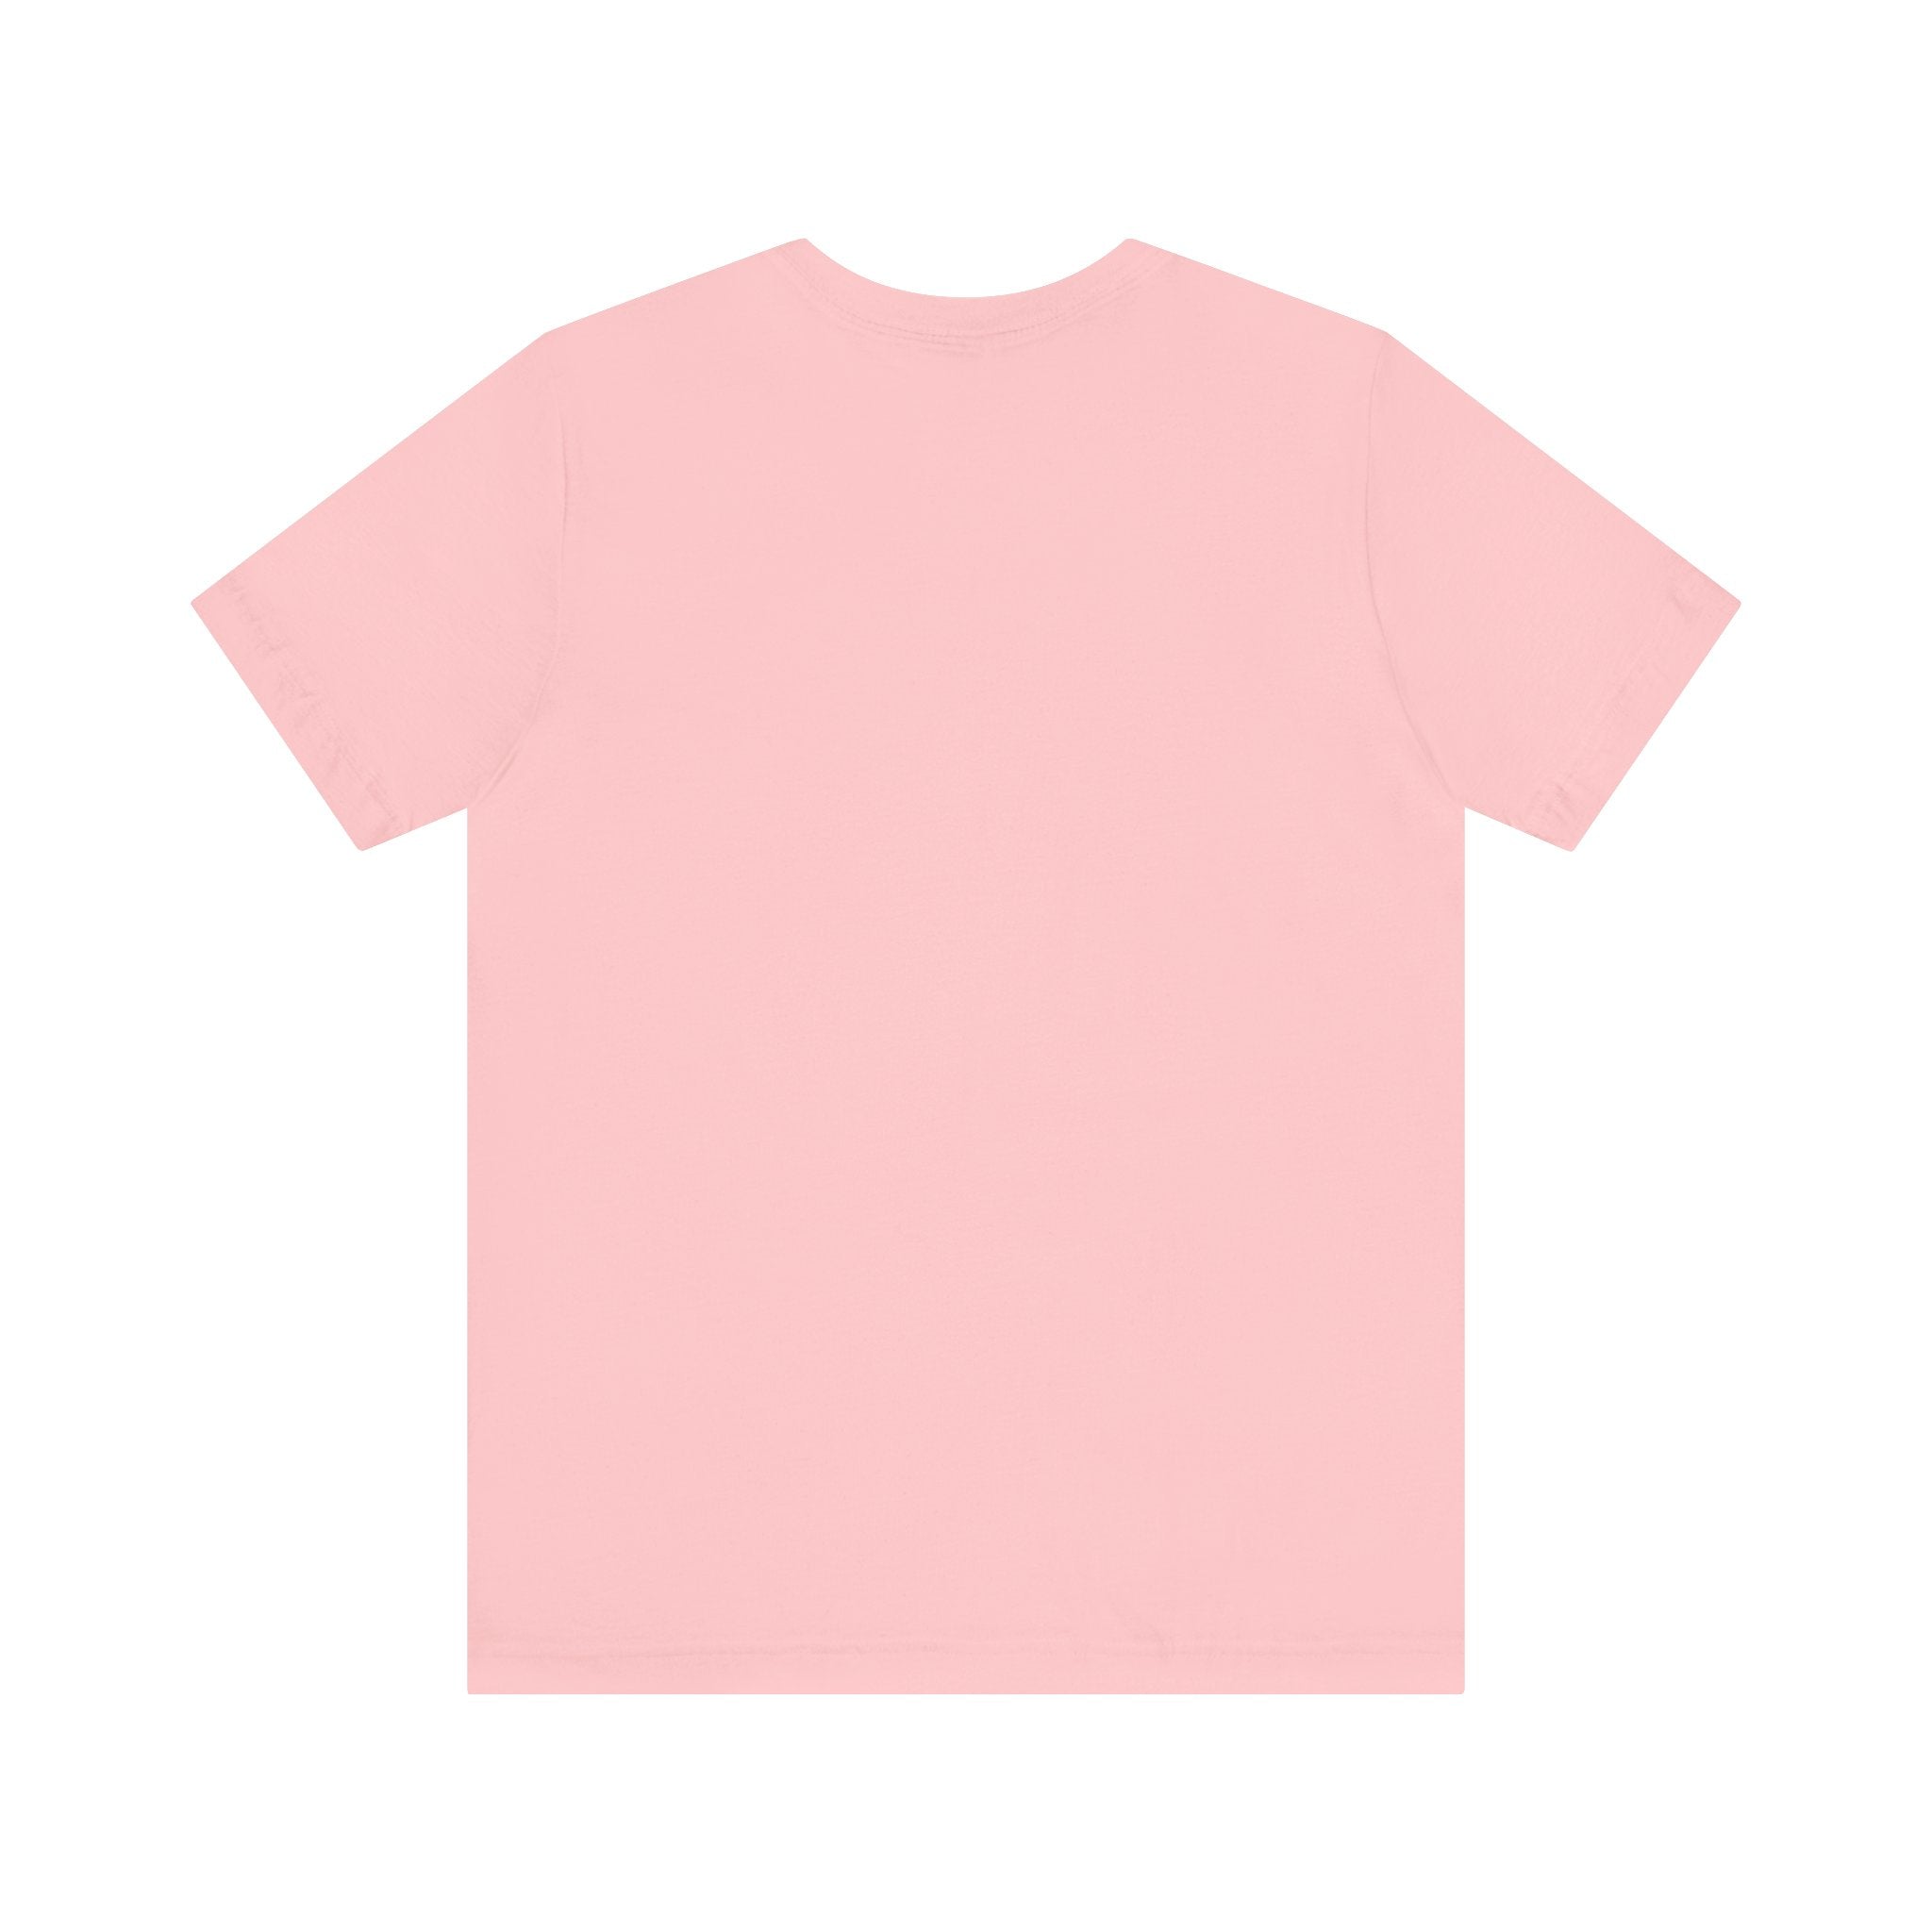 Dough Boy T-Shirt